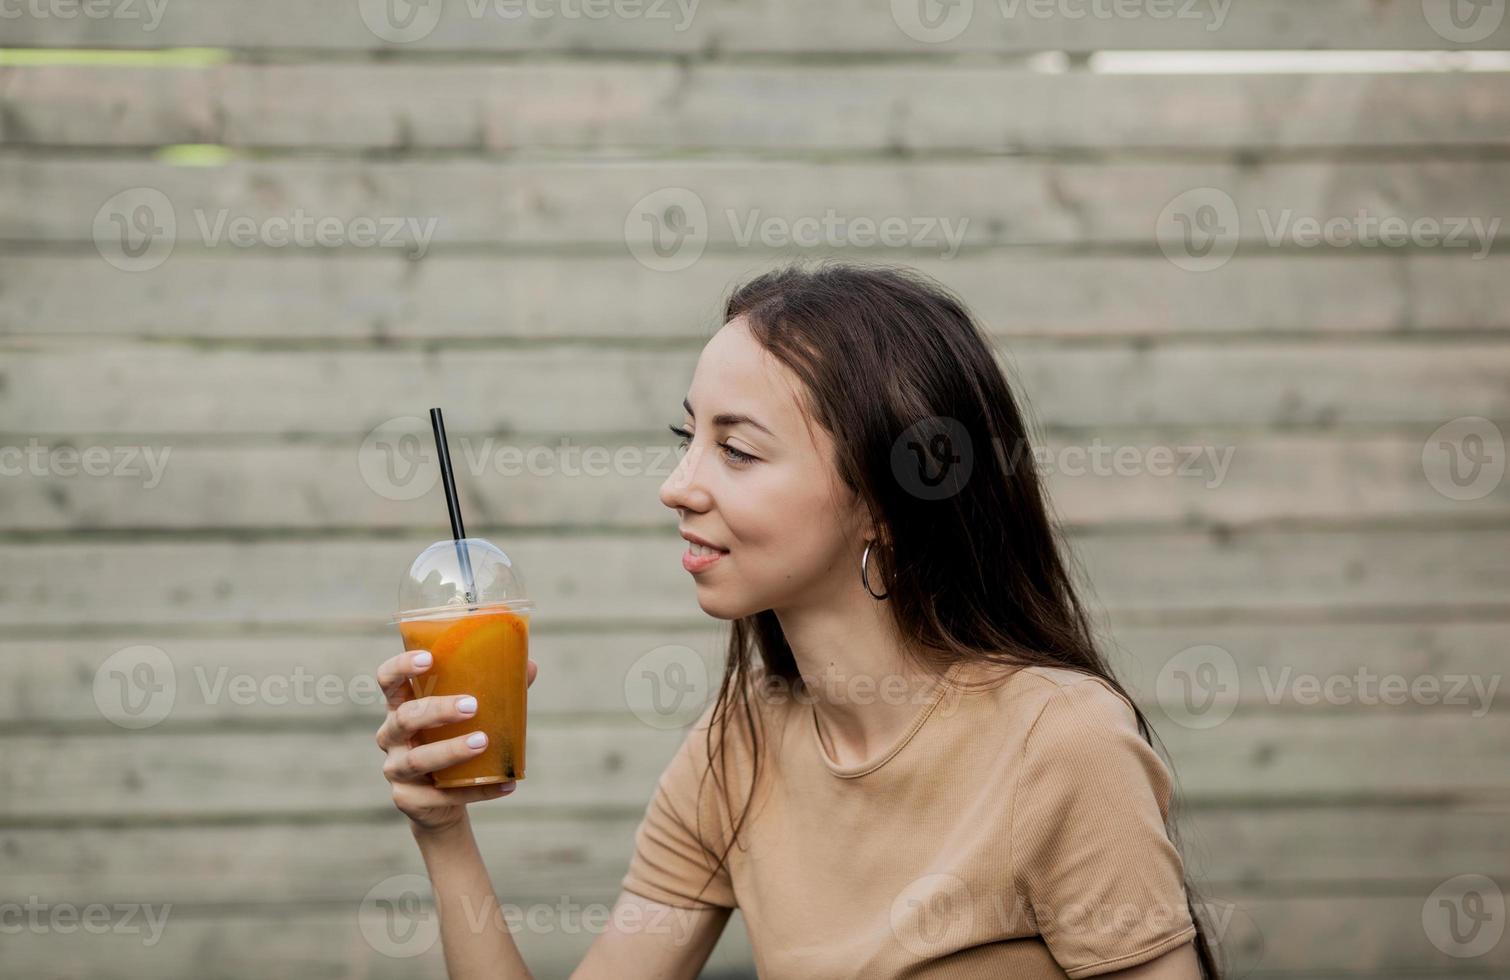 vegetarian woman holds juice photo